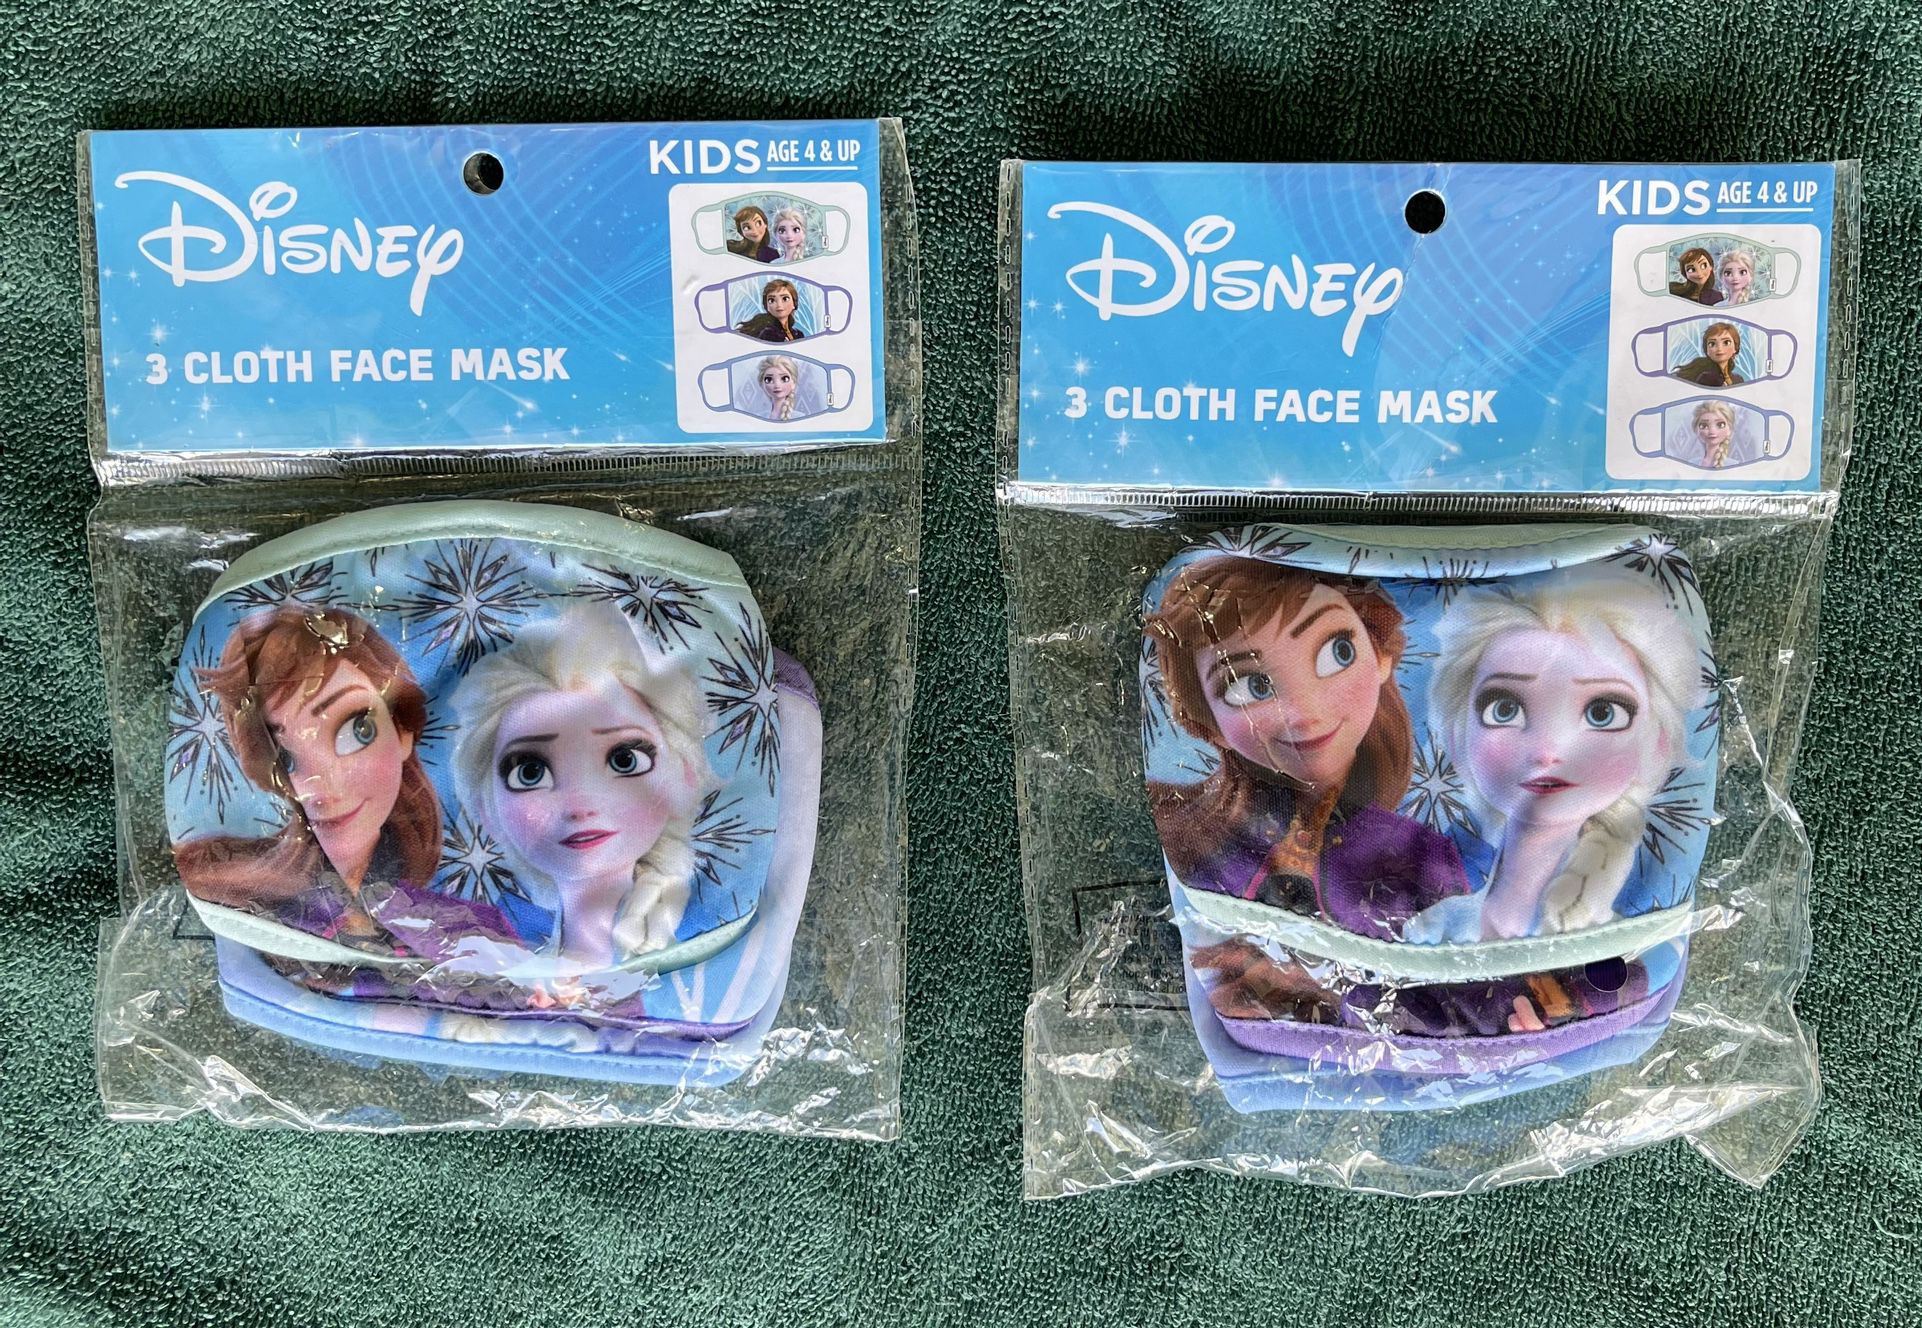 Disney Frozen Kids Age 4 to 8 Cloth Face Masks Cotton Pack Fashions Washable Reusable, 6 Count